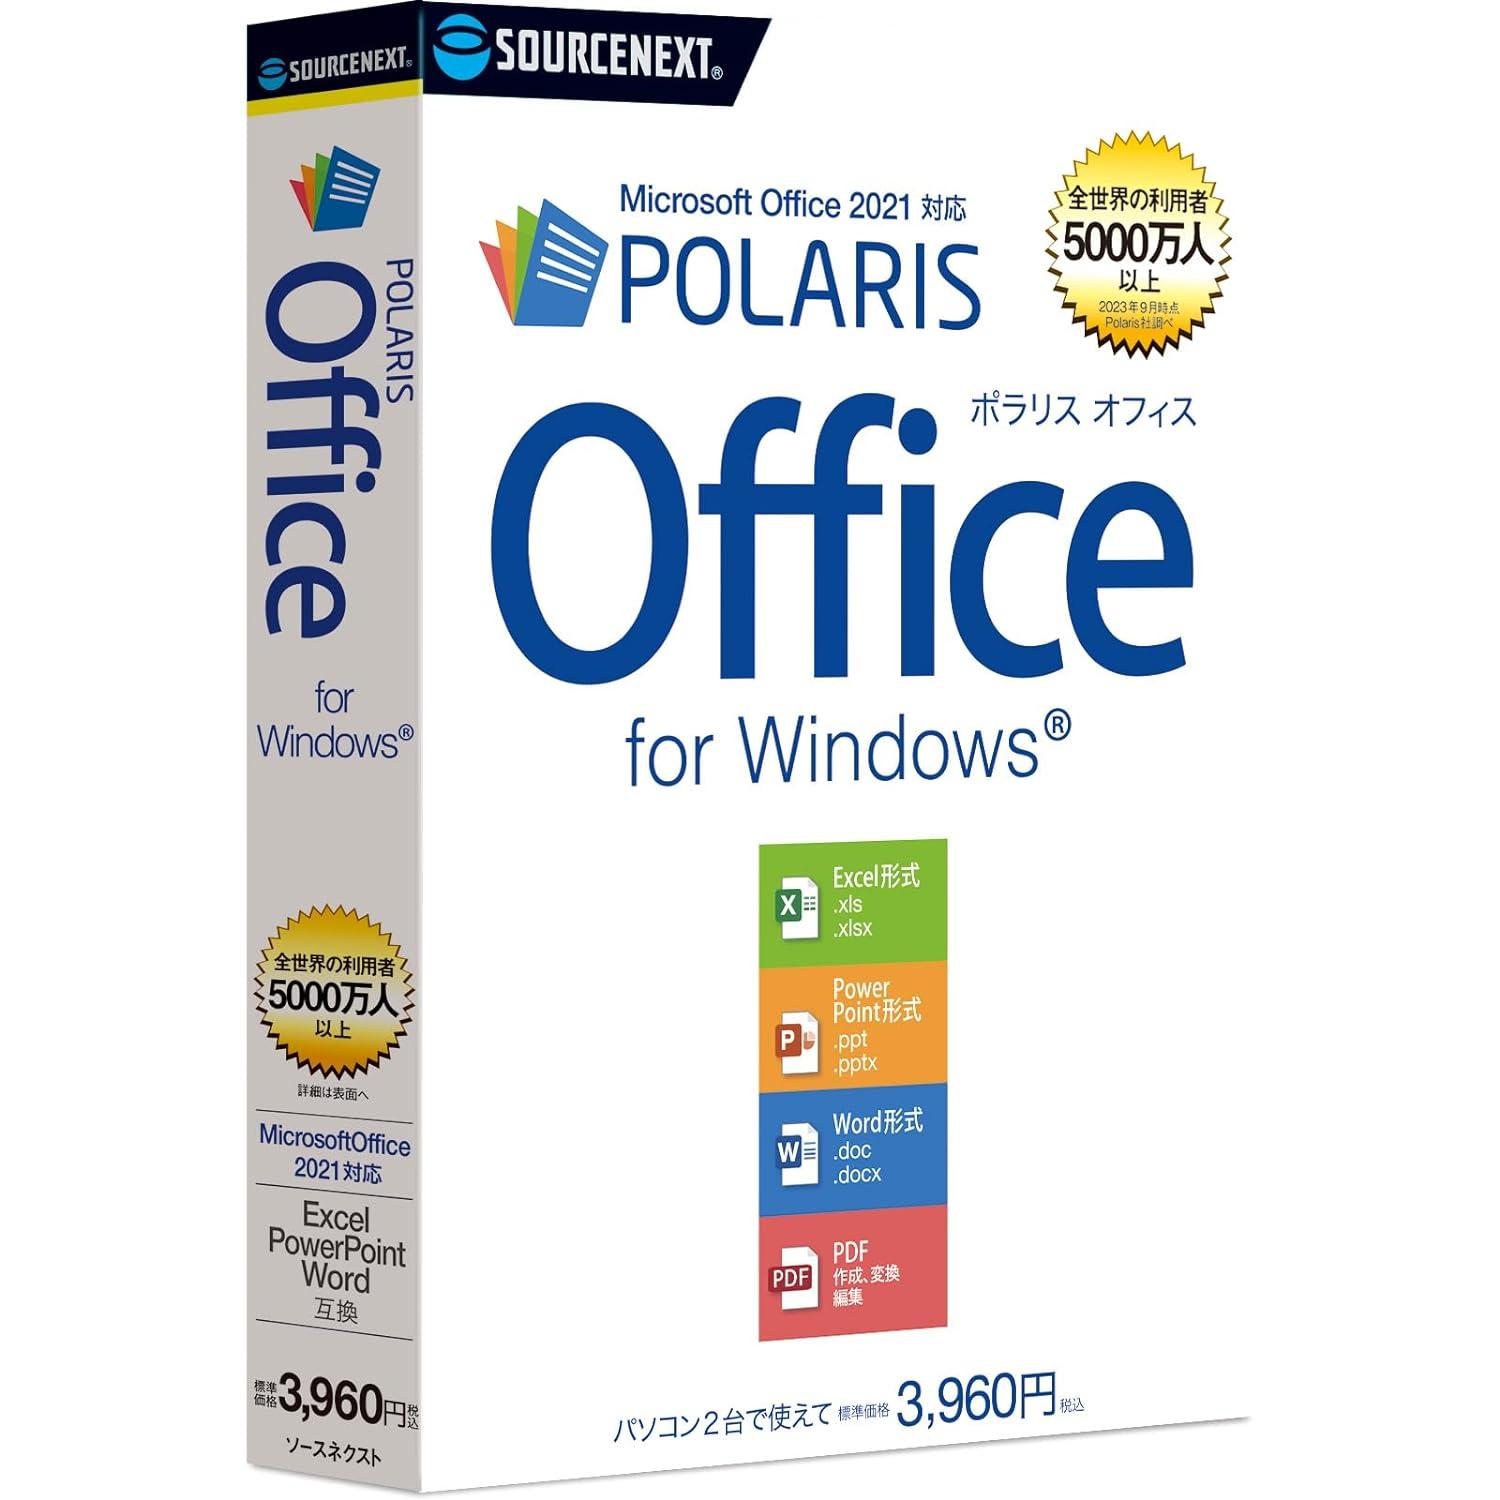 Polaris Office[Windows](0000337180)